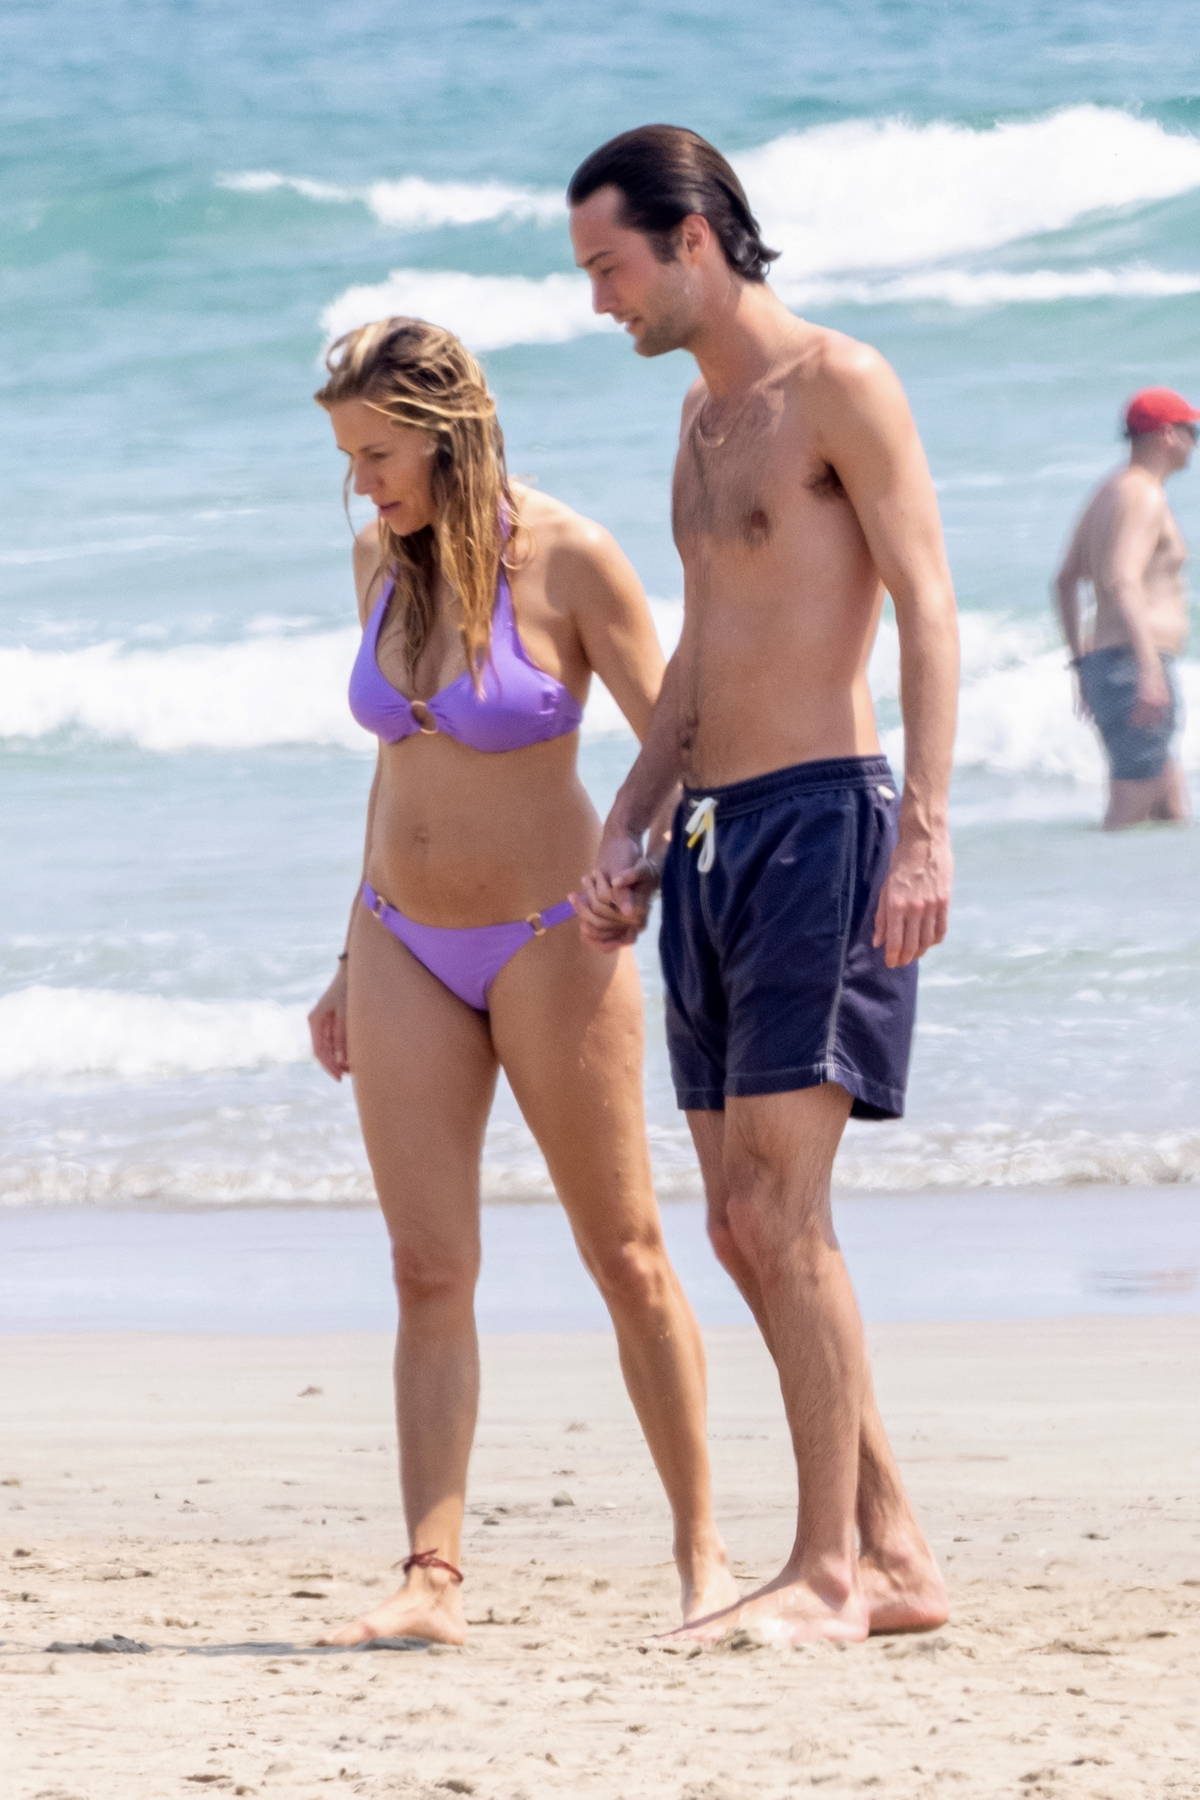 Sienna Miller shows off her bikini body while enjoying a beach day with boyfriend Oli Green in Costa Rica